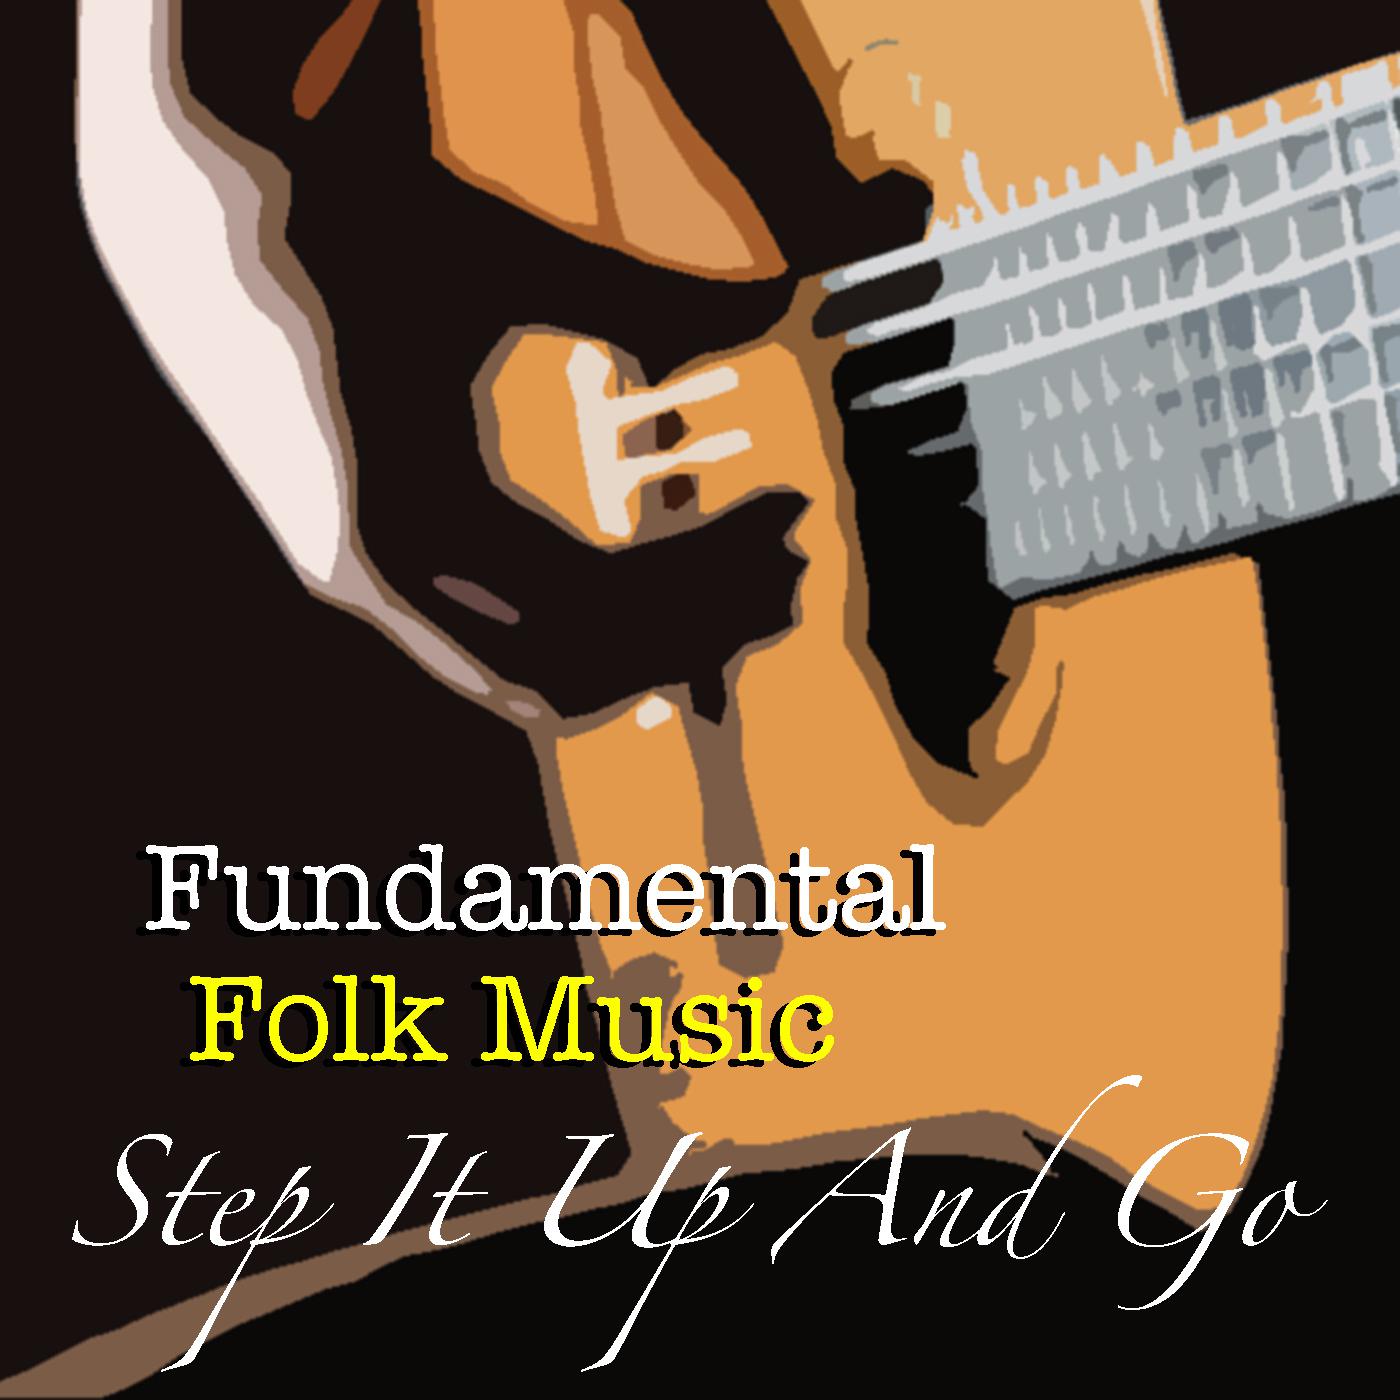 Step It Up And Go Fundamental Folk Music